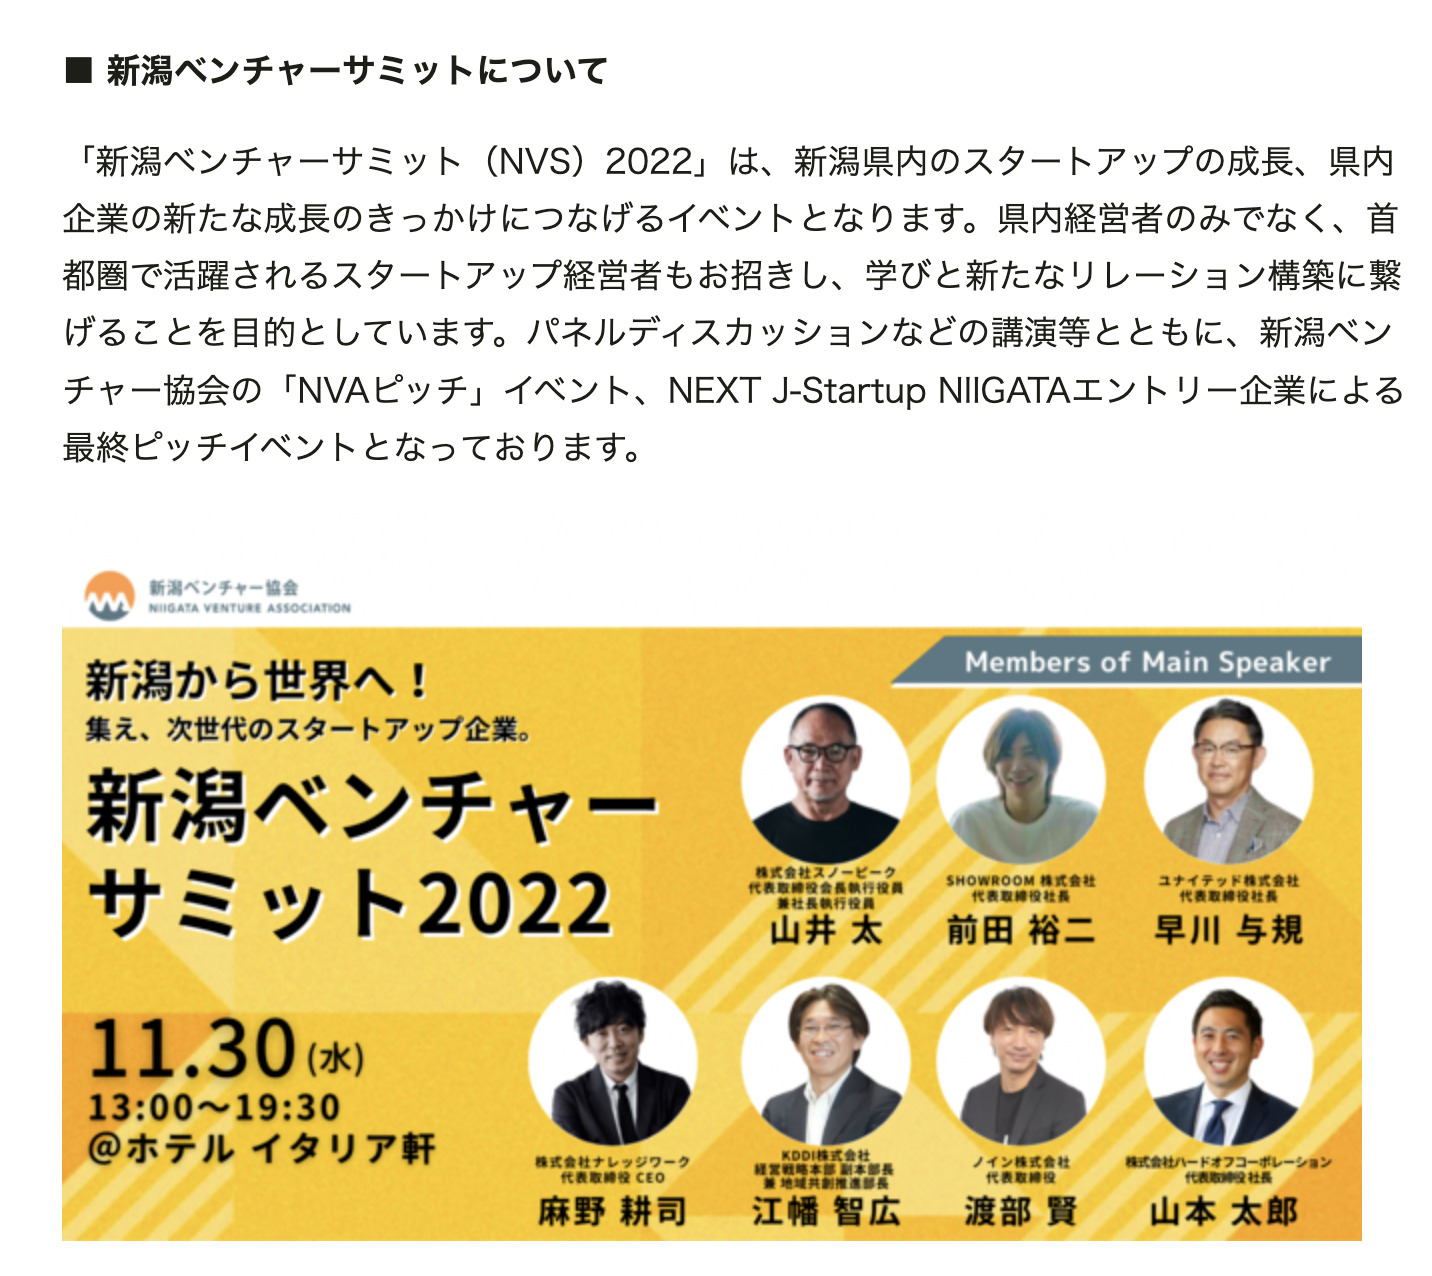 Next J Startup NIIGATA 新潟から世界へ！